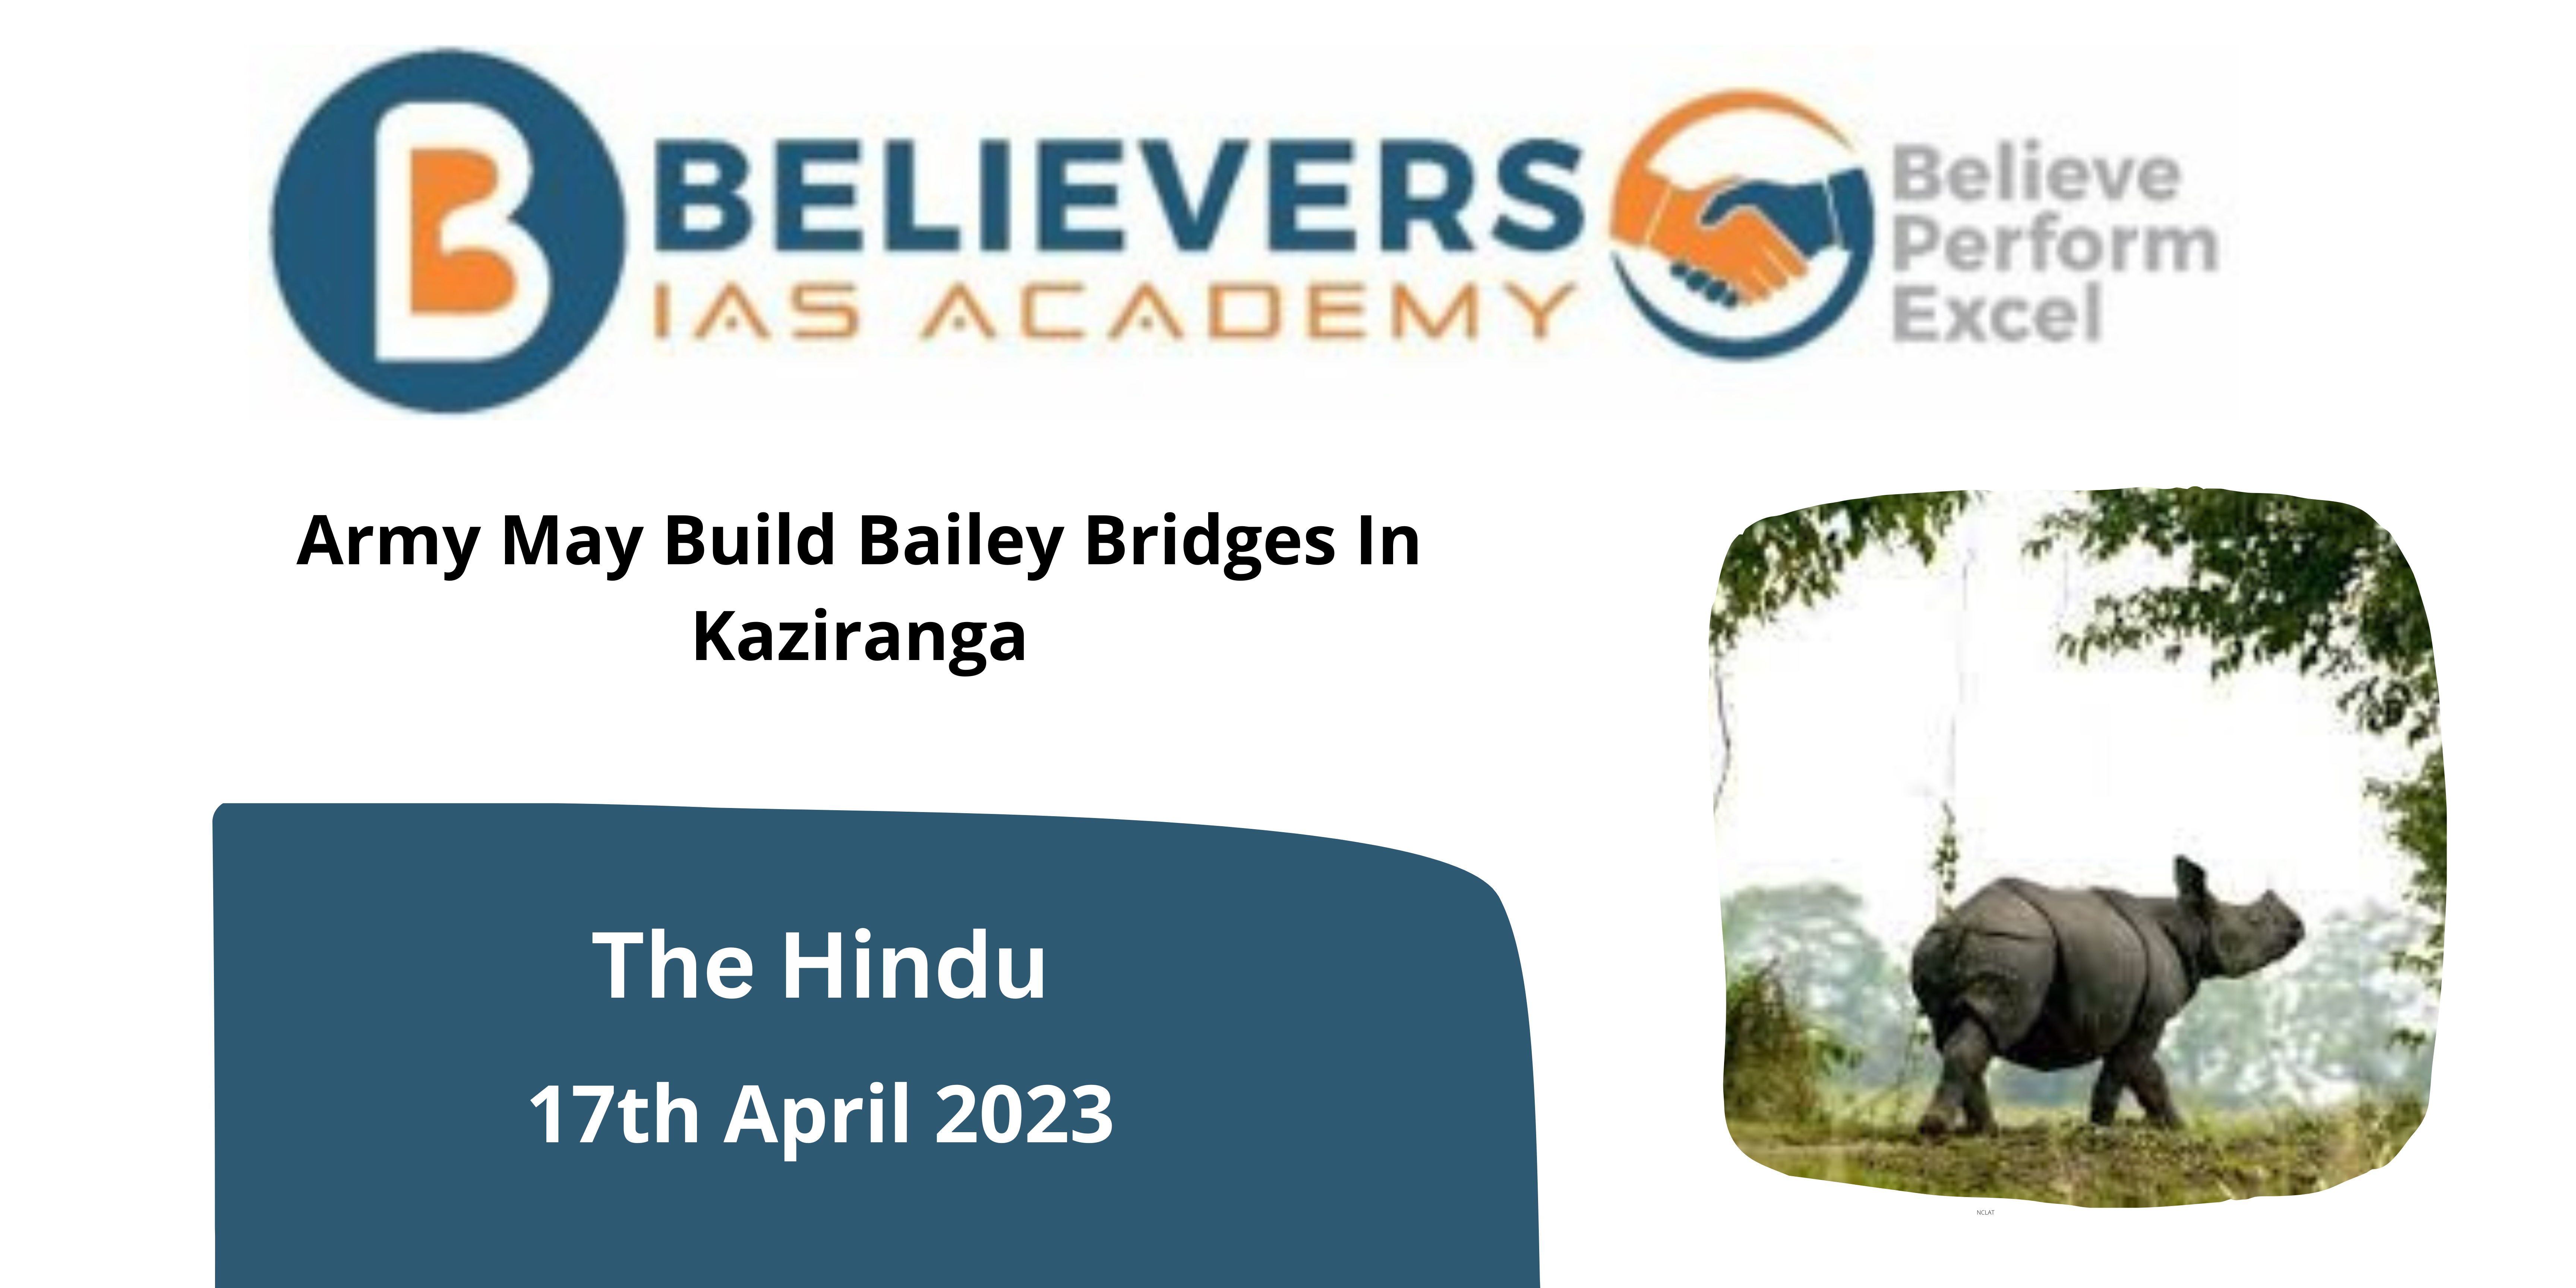 Army May Build Bailey Bridges In Kaziranga